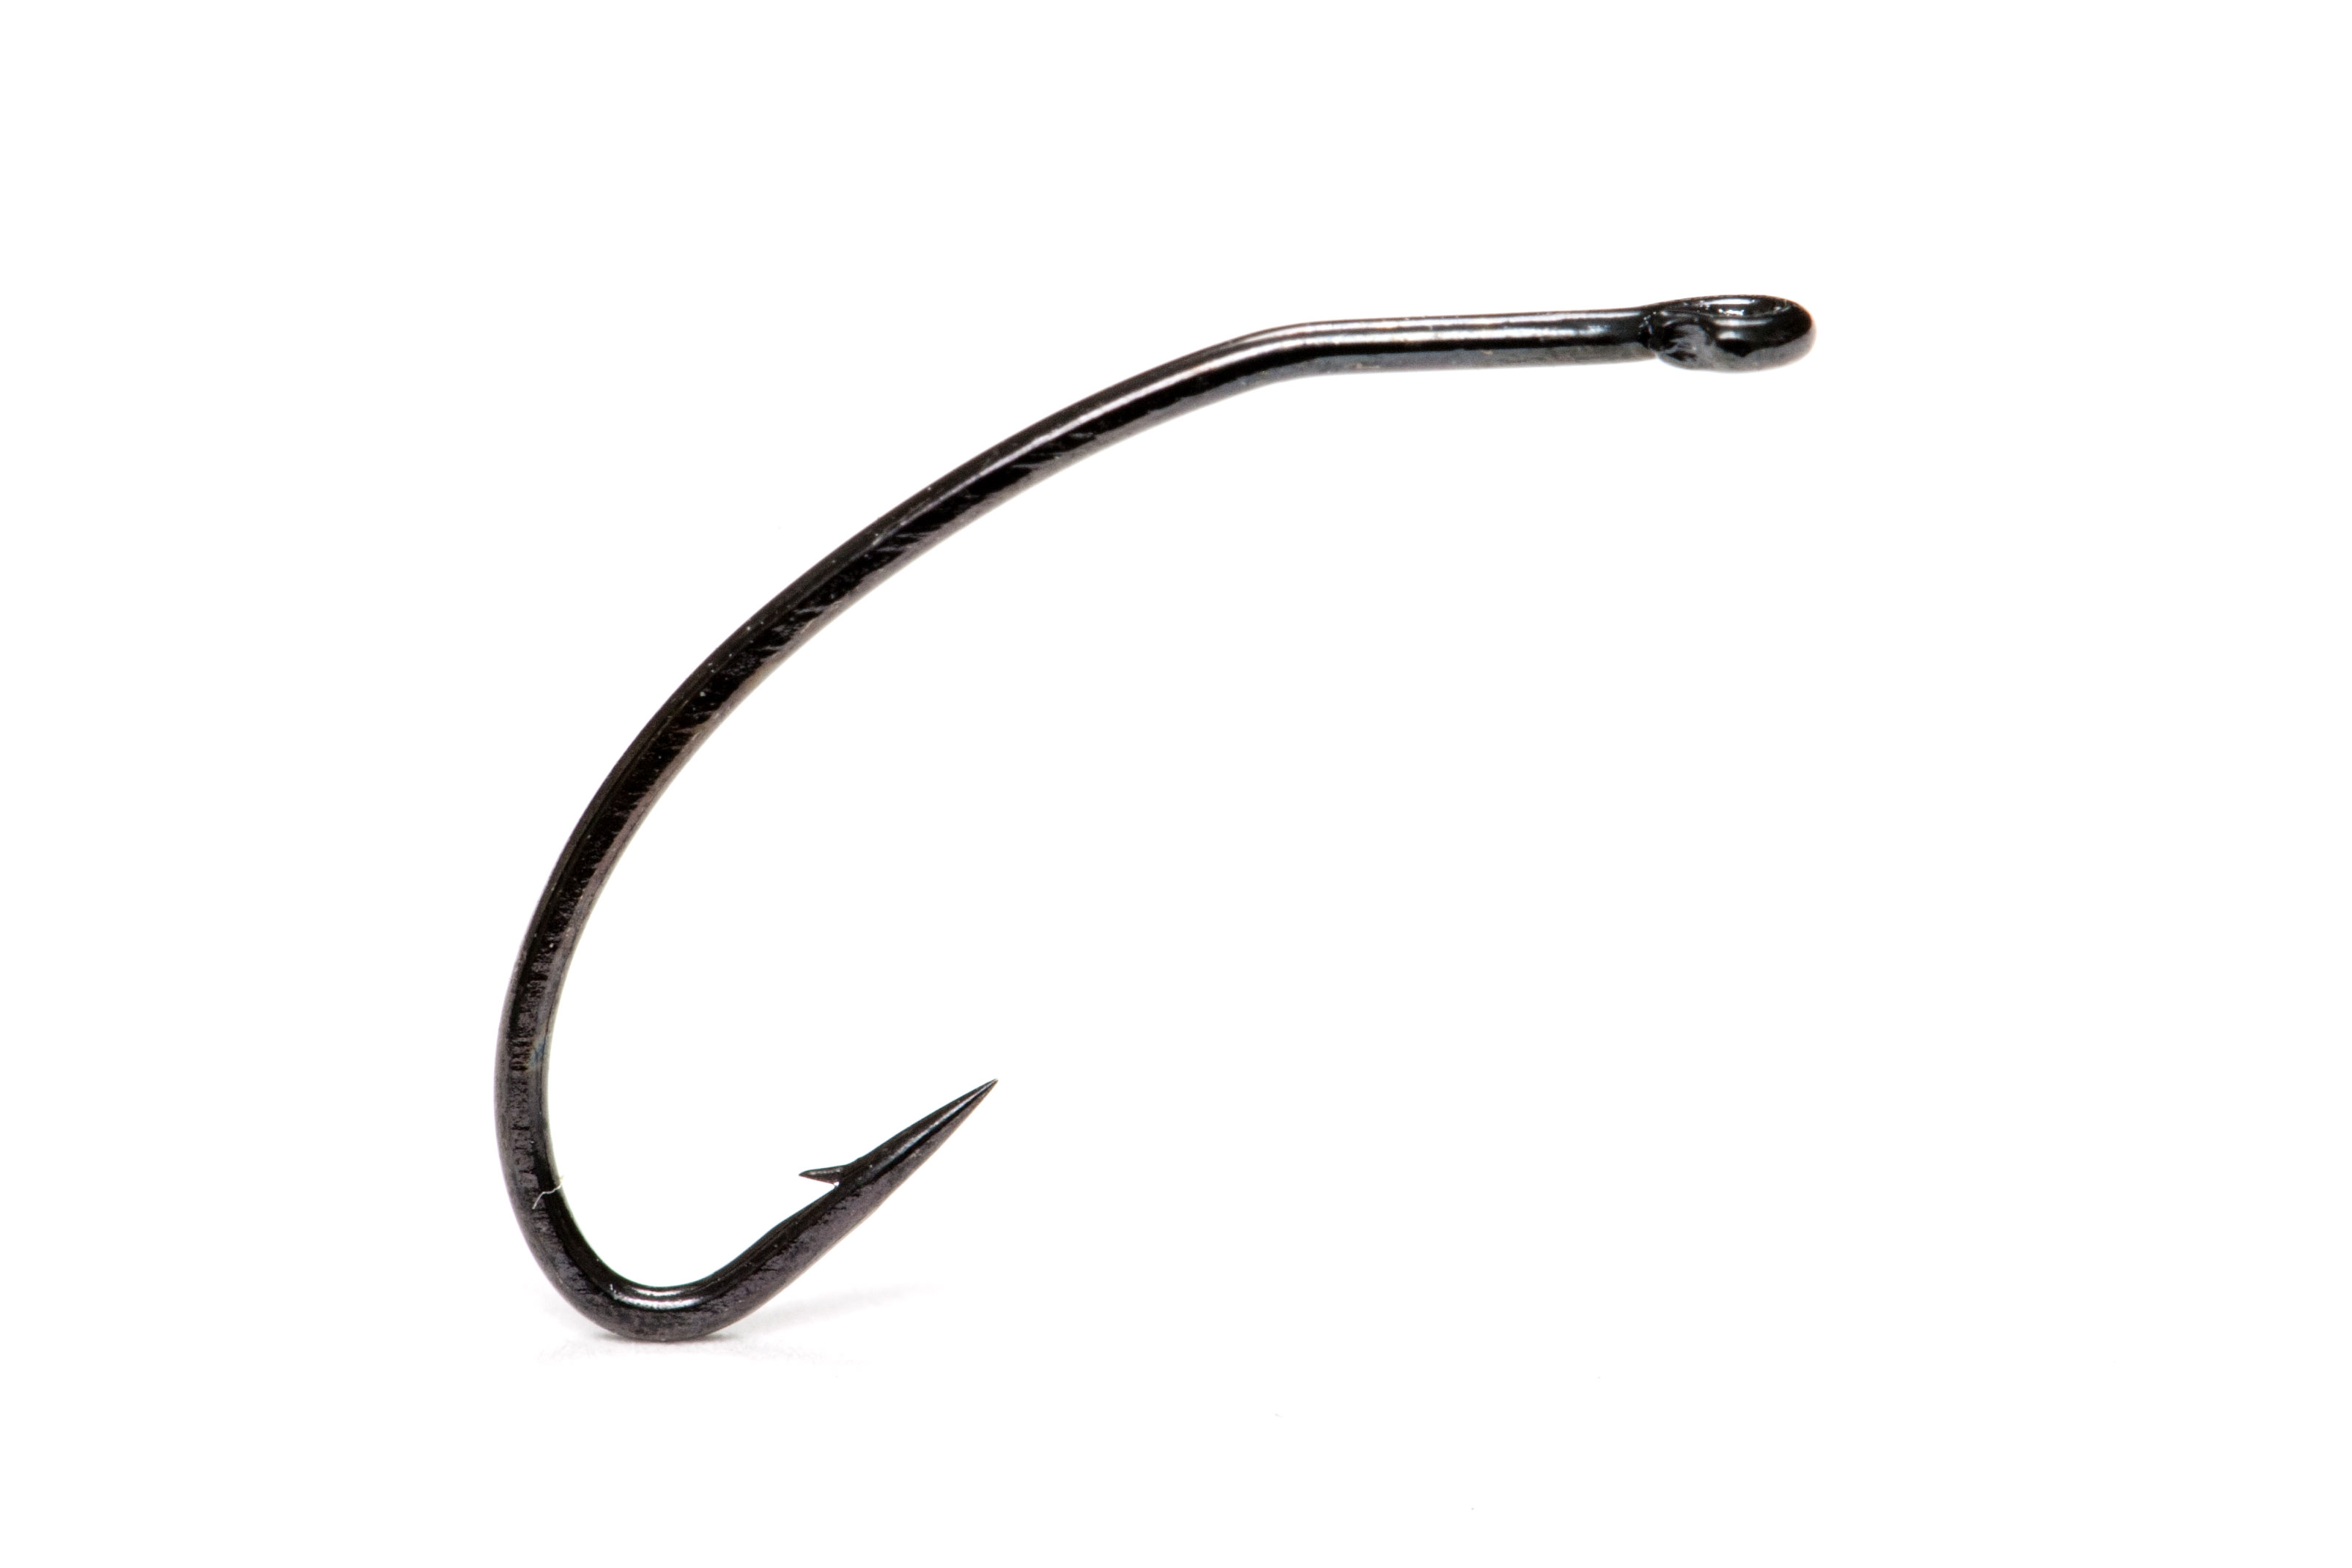 Partridge 15BNX Klinkhammer Extreme Trout Hooks Size: 16 : 25 per